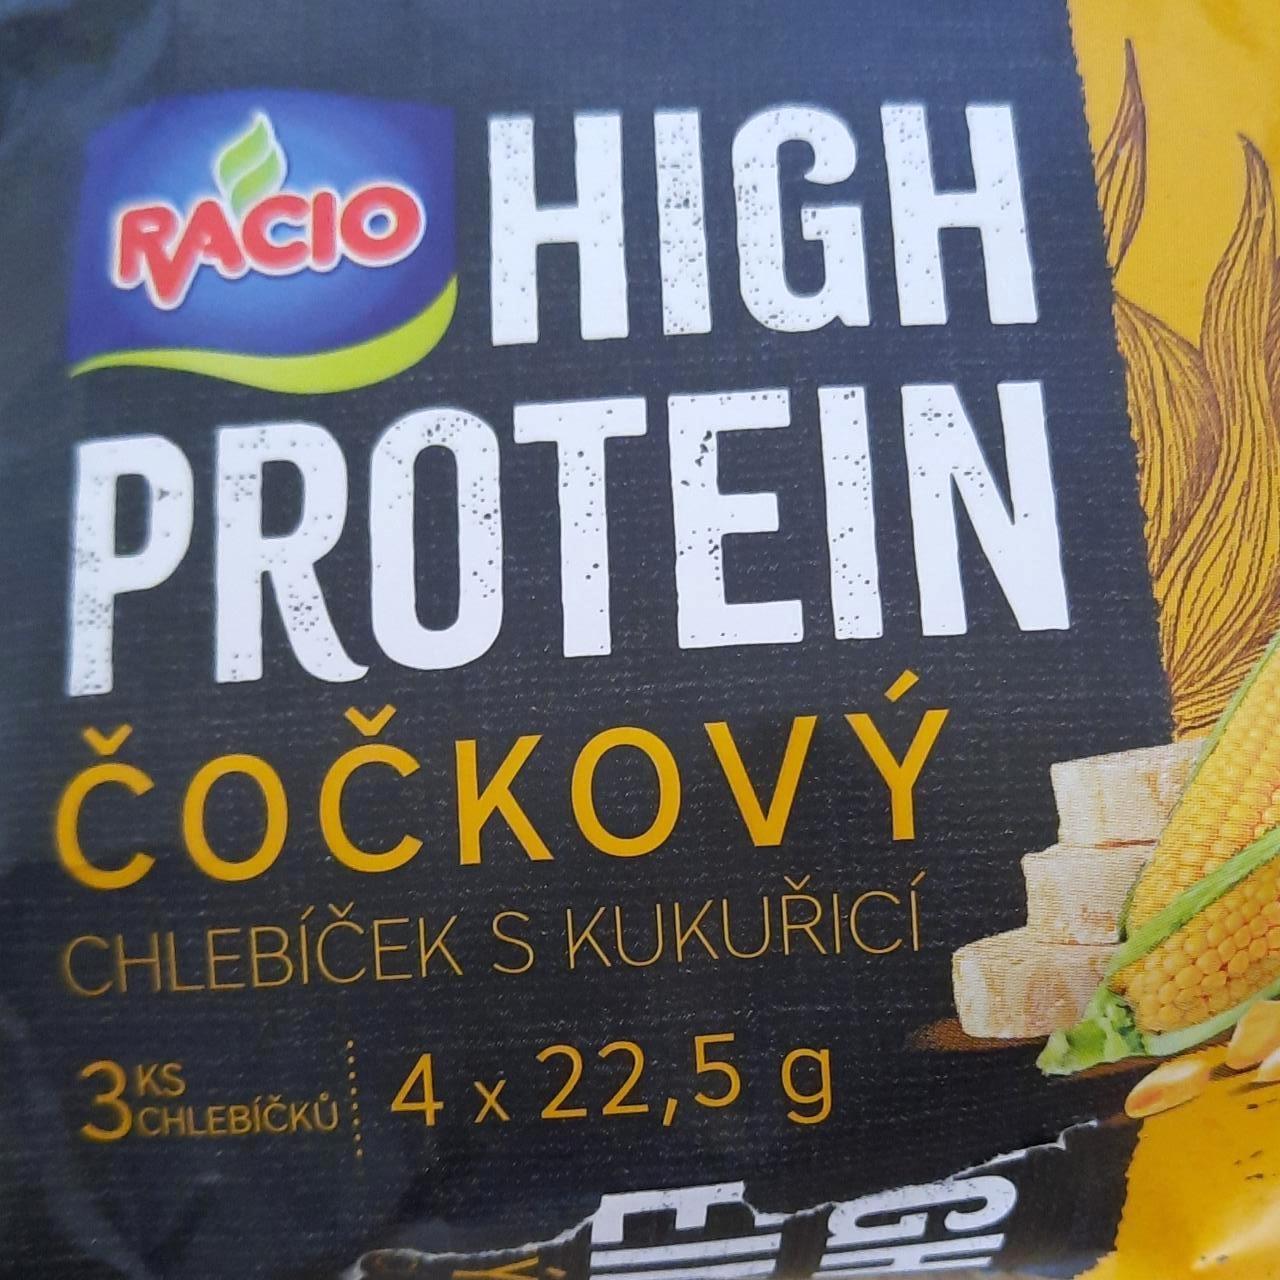 Képek - High protein čočkový chlebíček s kukuřicí Racio